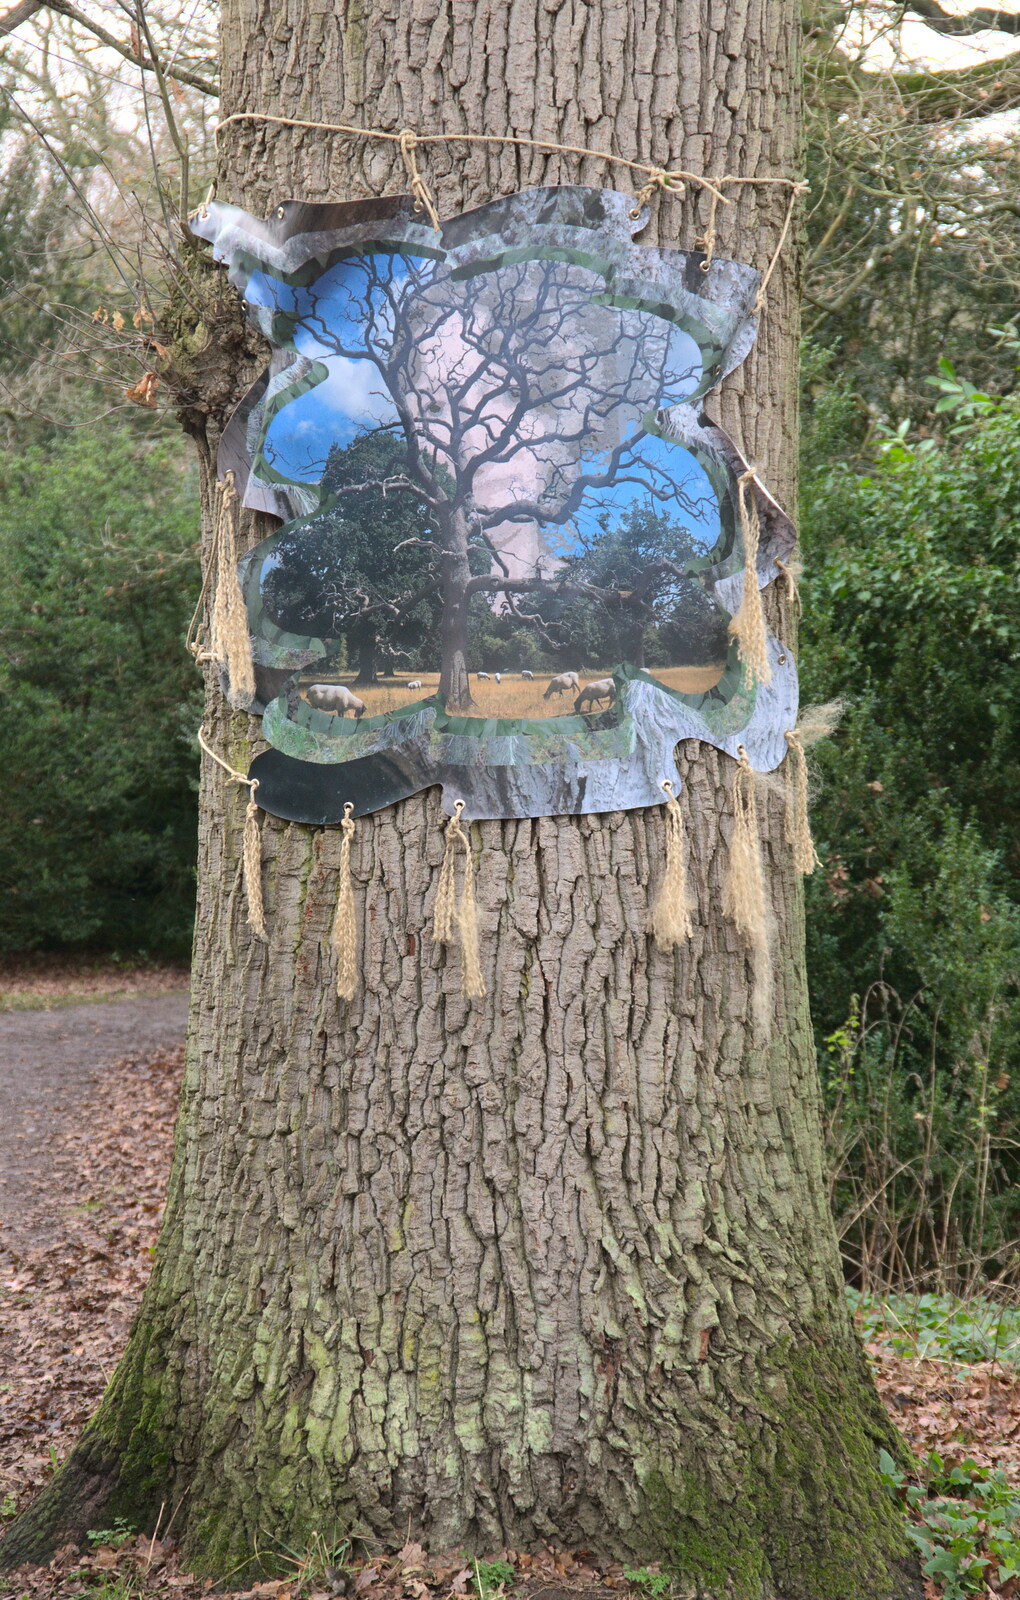 More hanging tree art from Ickworth House, Horringer, Suffolk - 29th December 2018